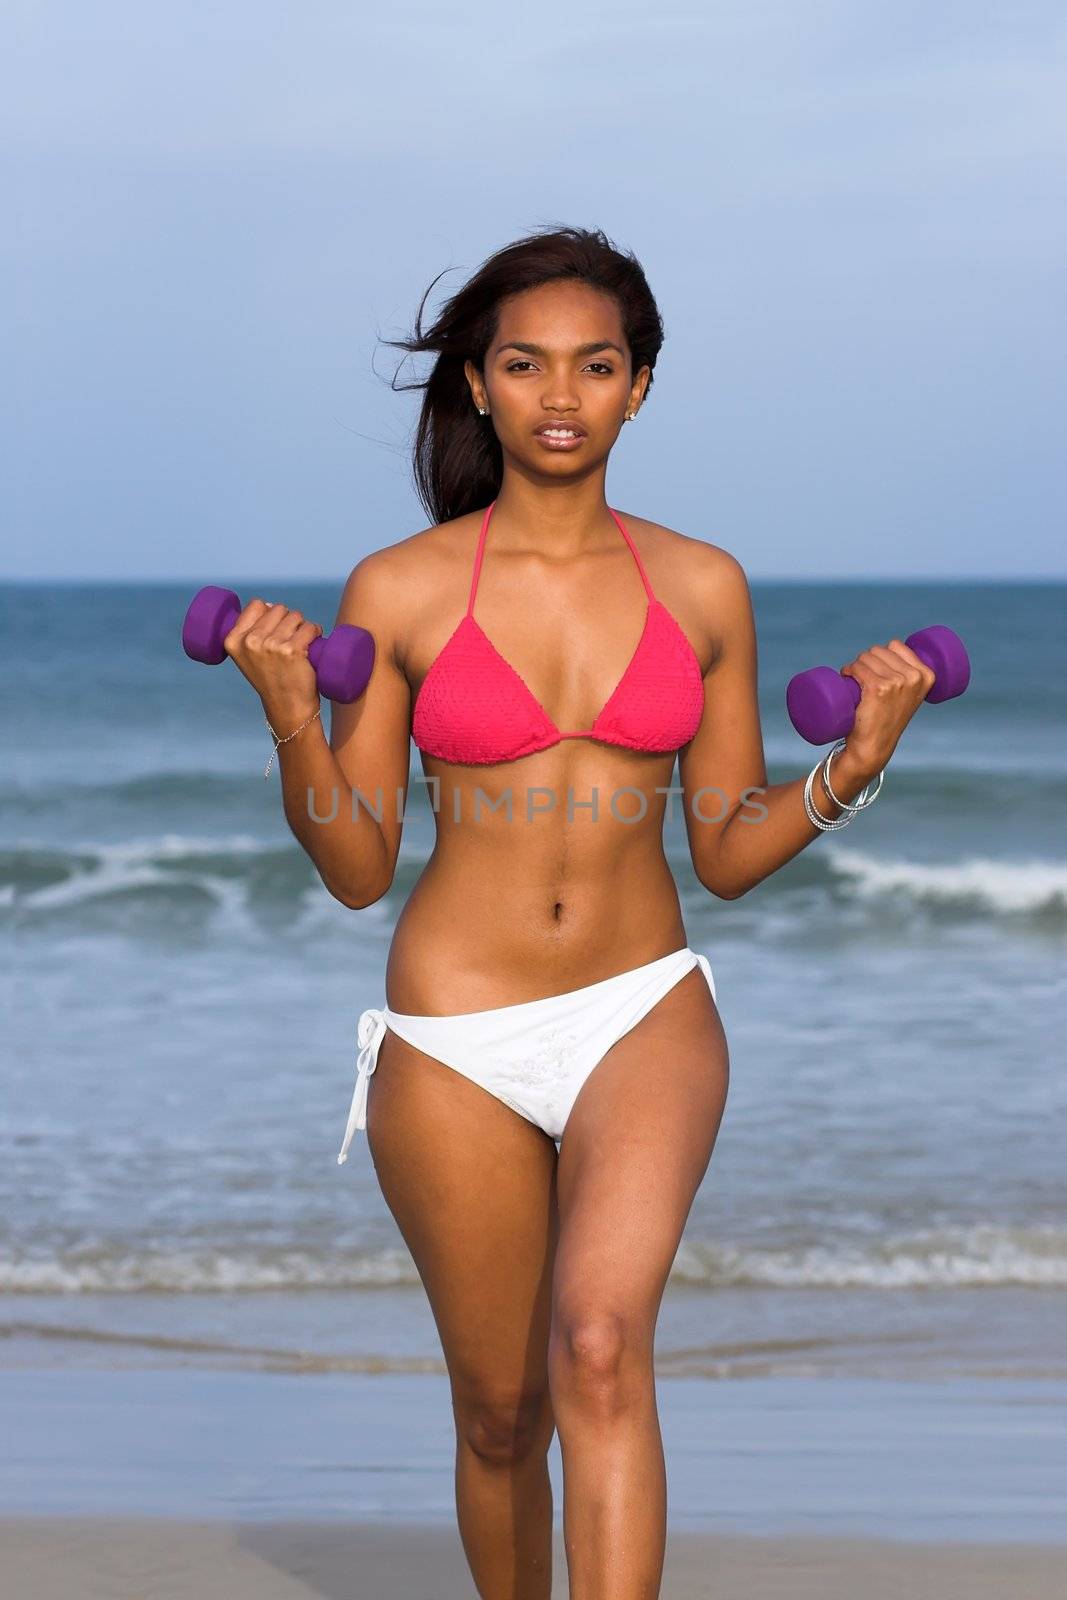 Ethnic Fitness model in bikini with dumbbells in her hands